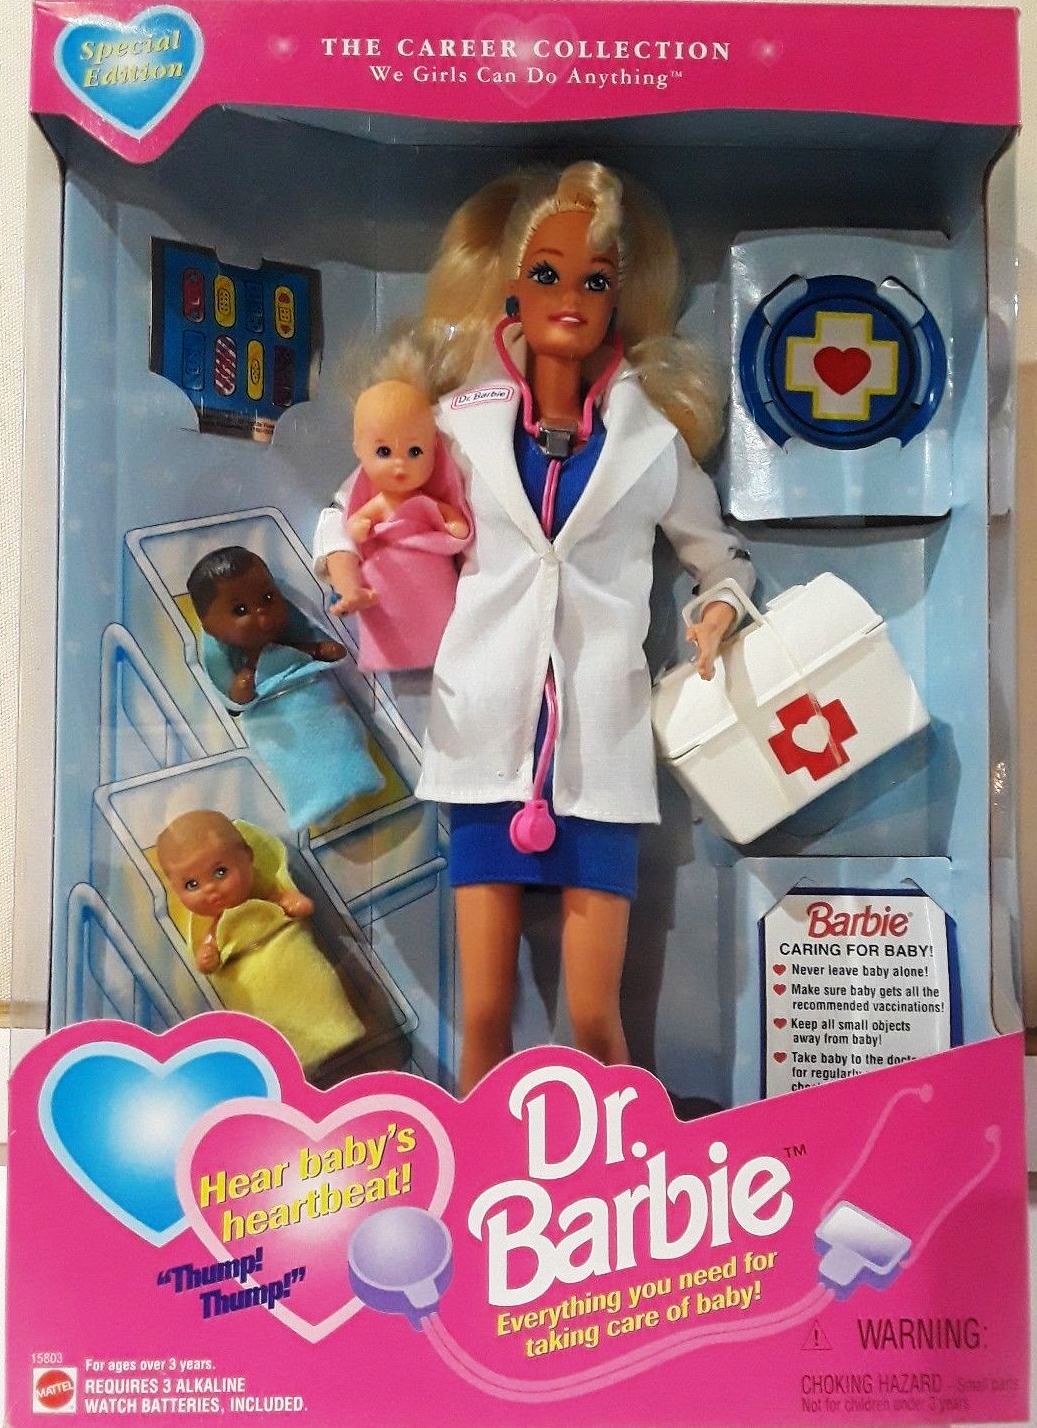 Terug kijken misdrijf Afhankelijk Dr Barbie “With Three Babies” (The Career Collection “Toys R Us Exclusive”  Special Edition) “Rare-Vintage” (1995) » Now And Then Collectibles